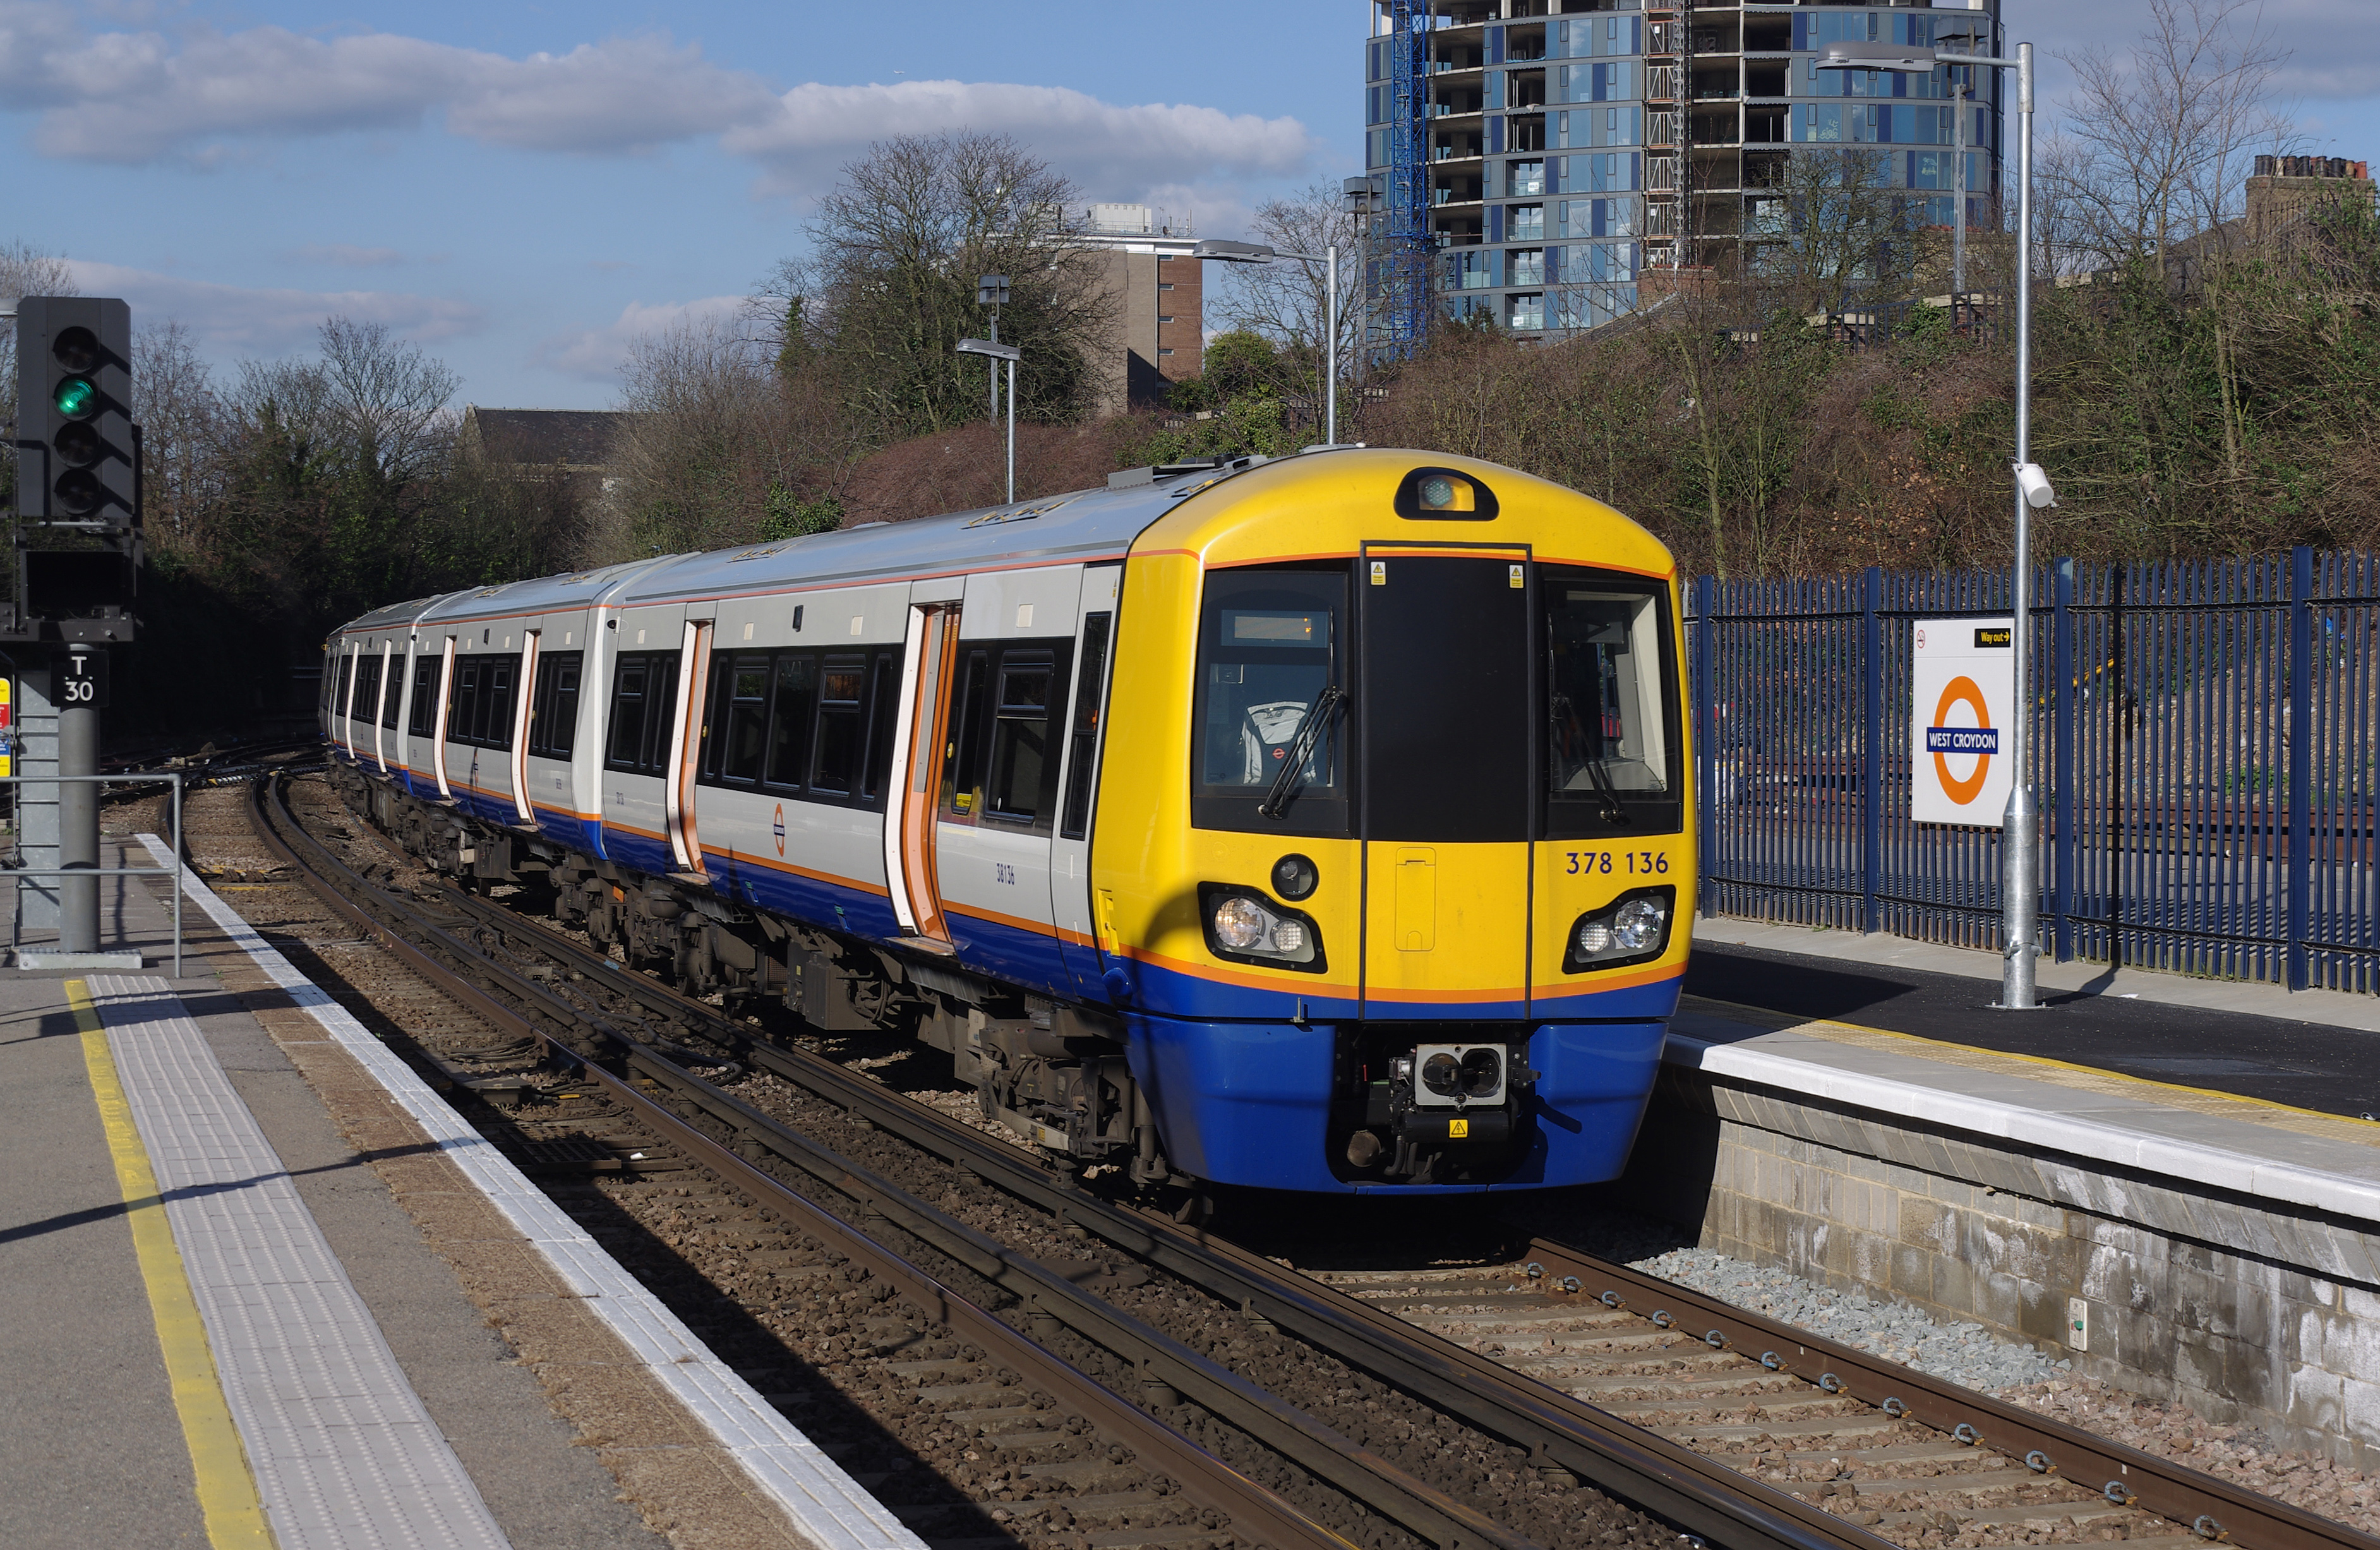 West Croydon station MMB 11 378136